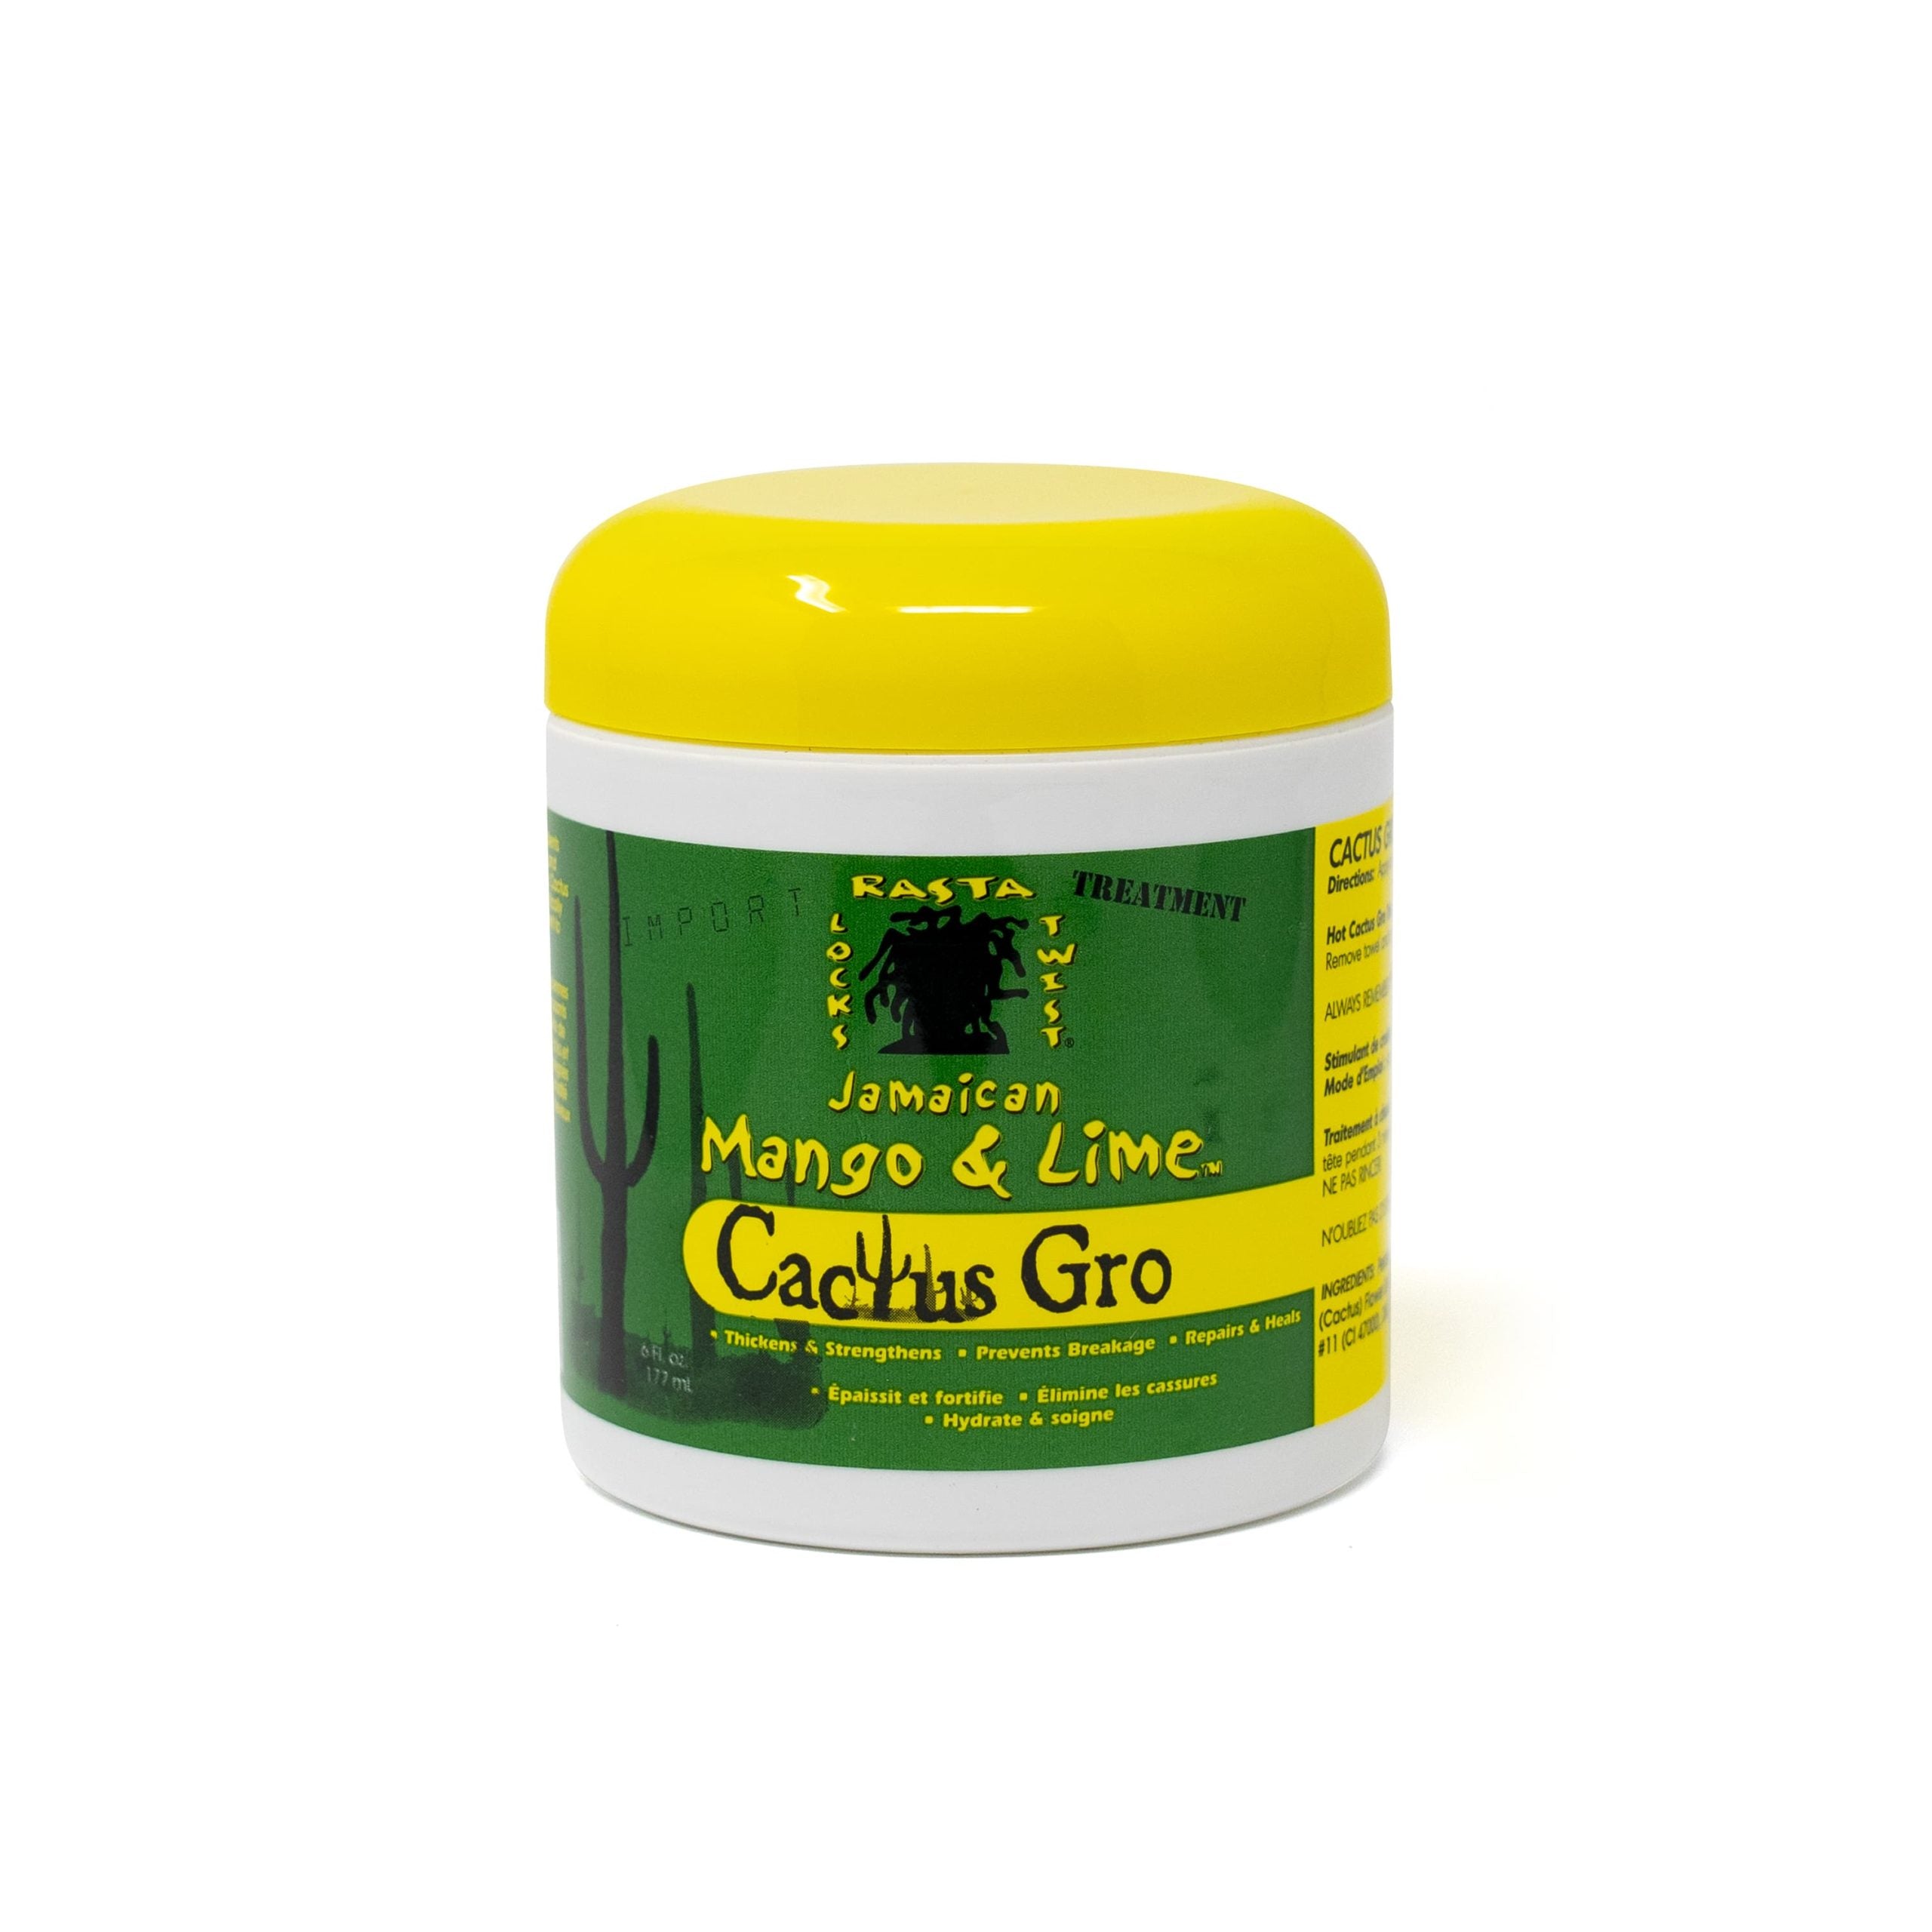 JAMAICAN MANGO & LIME CACTUS GRO 6oz-Jamaican Mango & Lime- Hive Beauty Supply